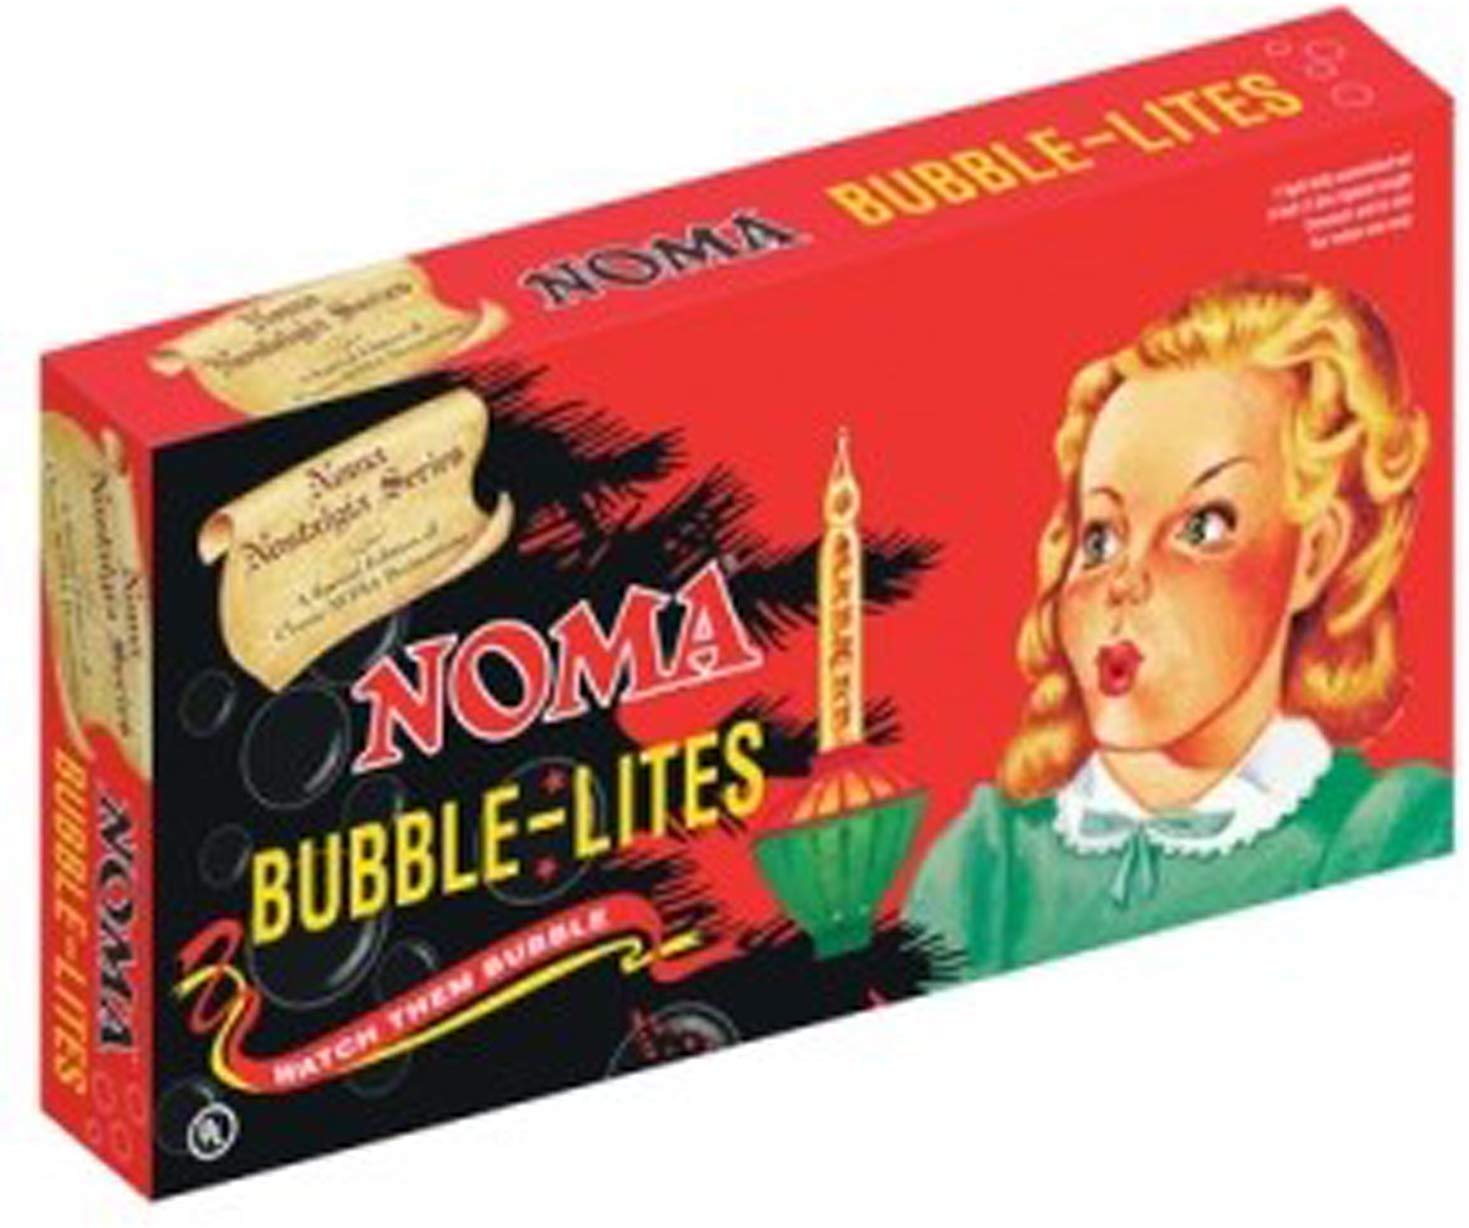 Noma Bubble Lites